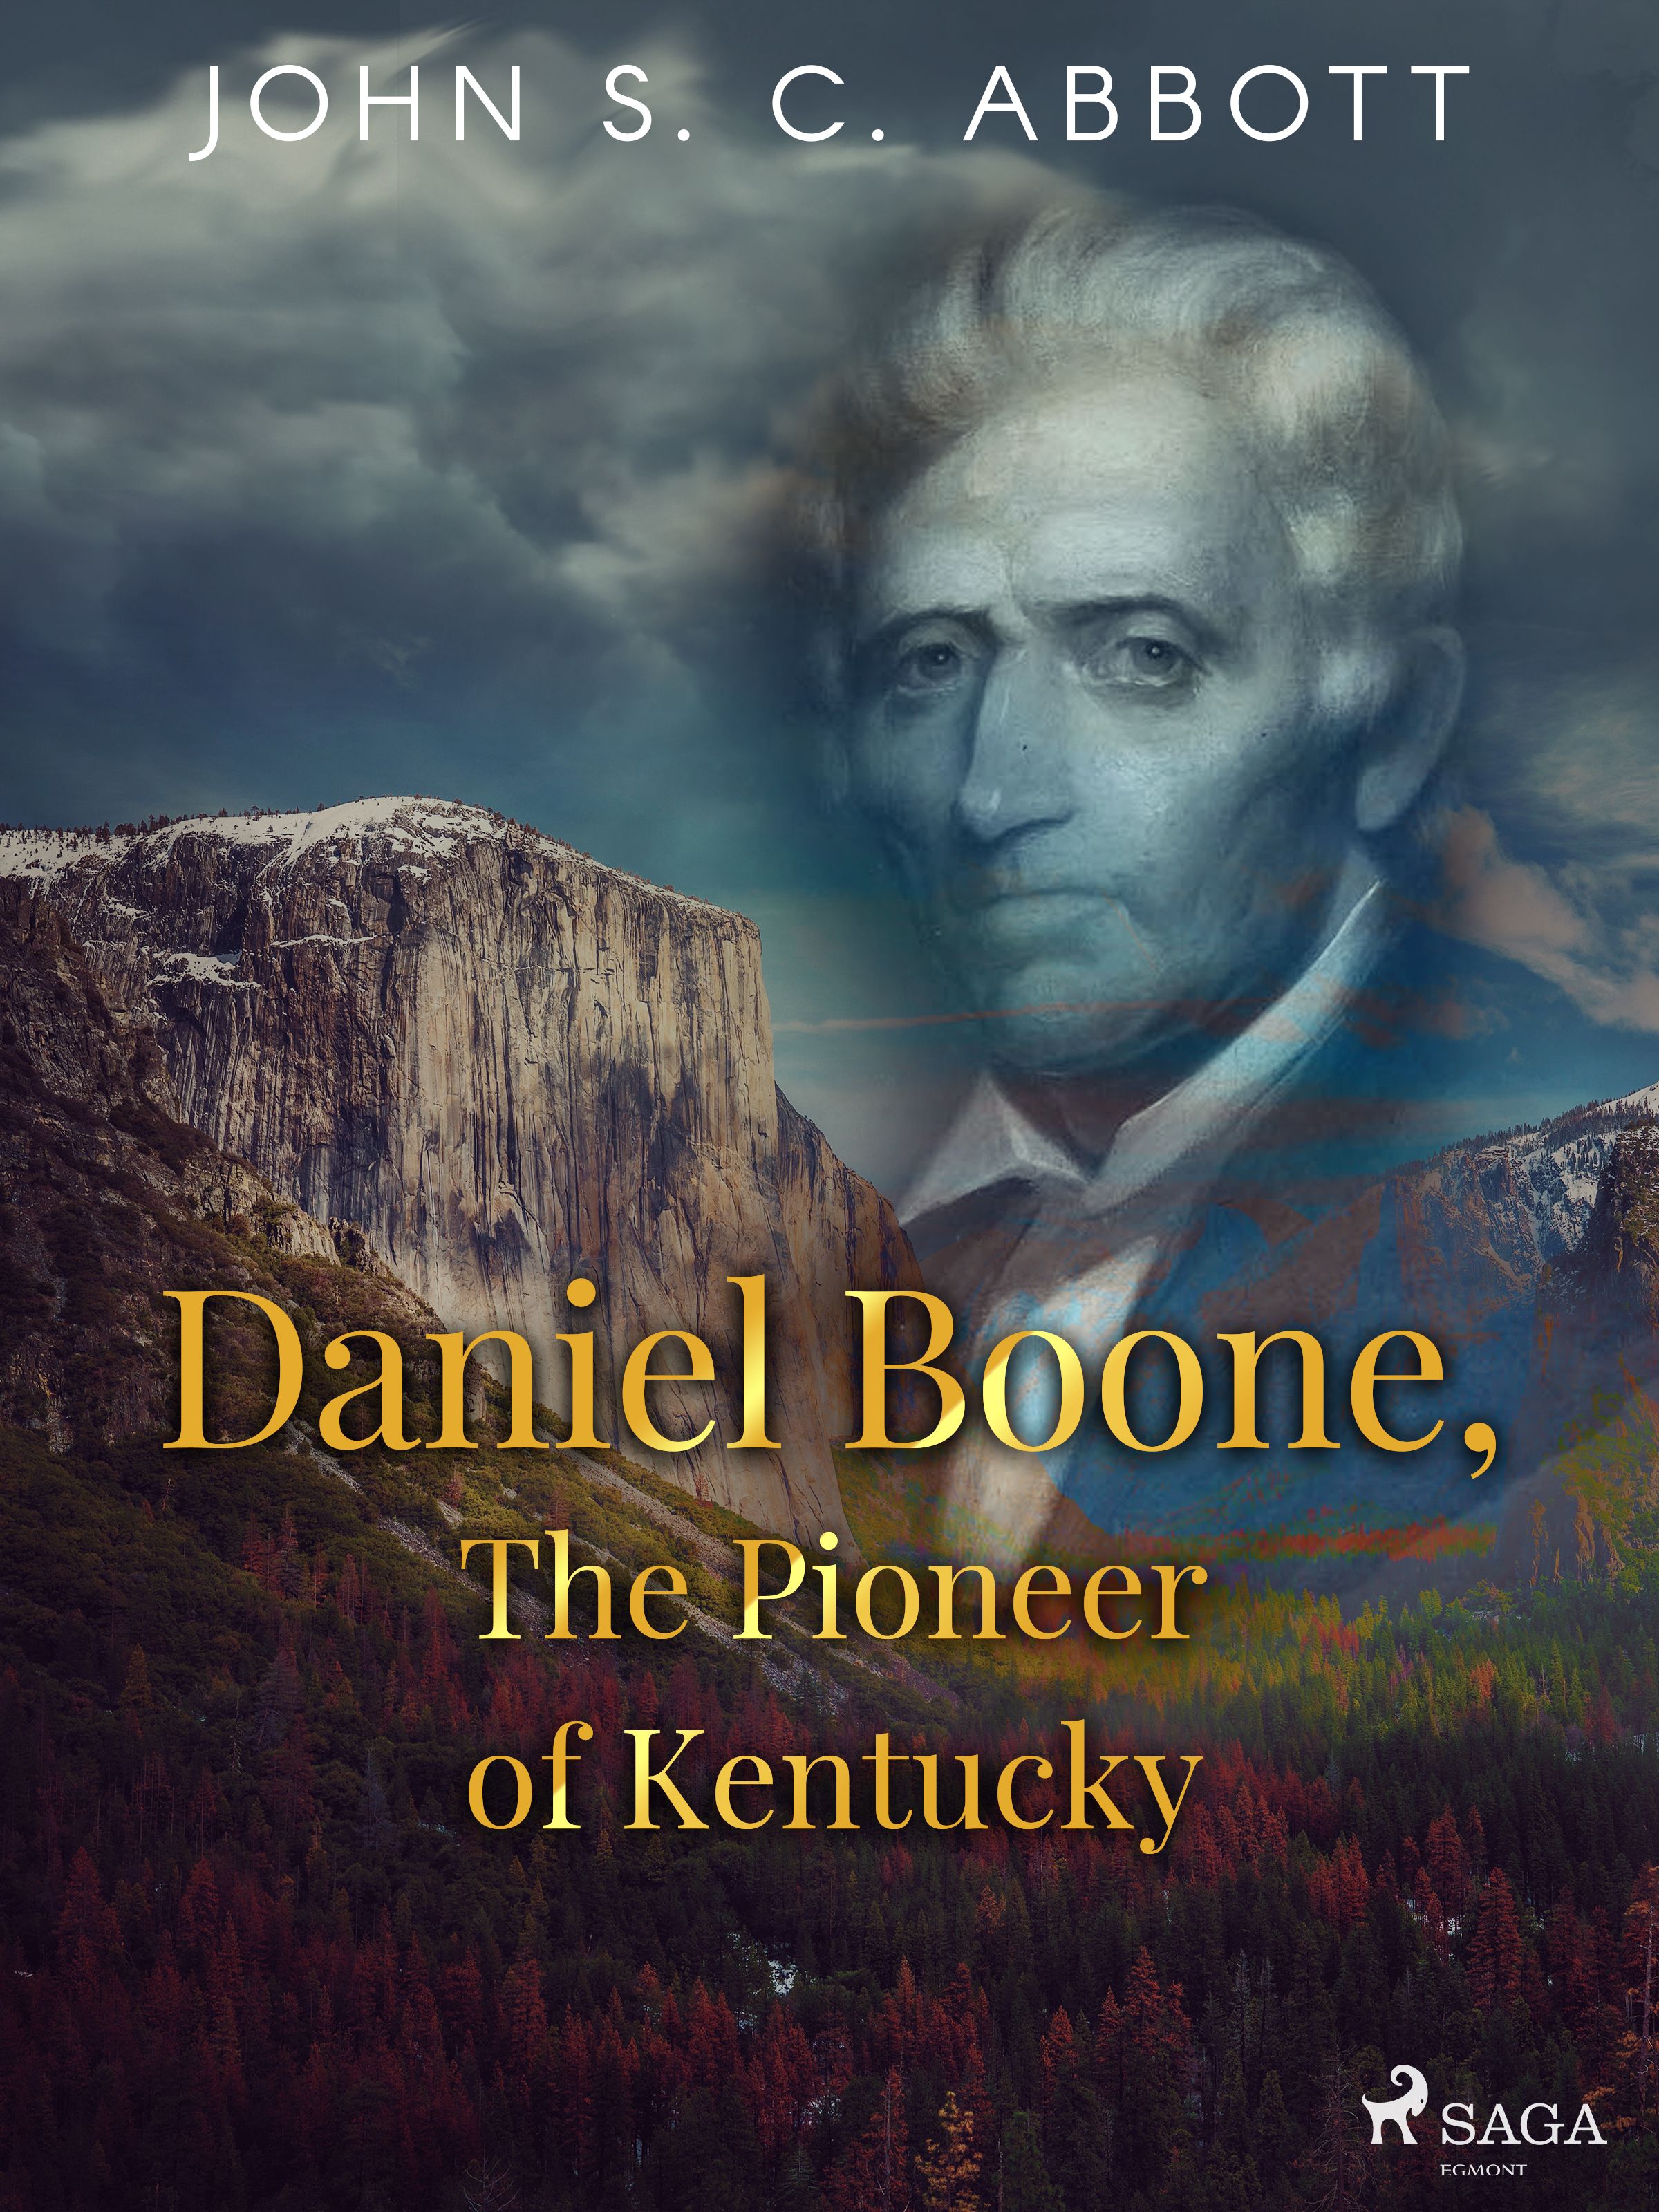 Daniel Boone, The Pioneer of Kentucky, e-bog af John S. C. Abbott